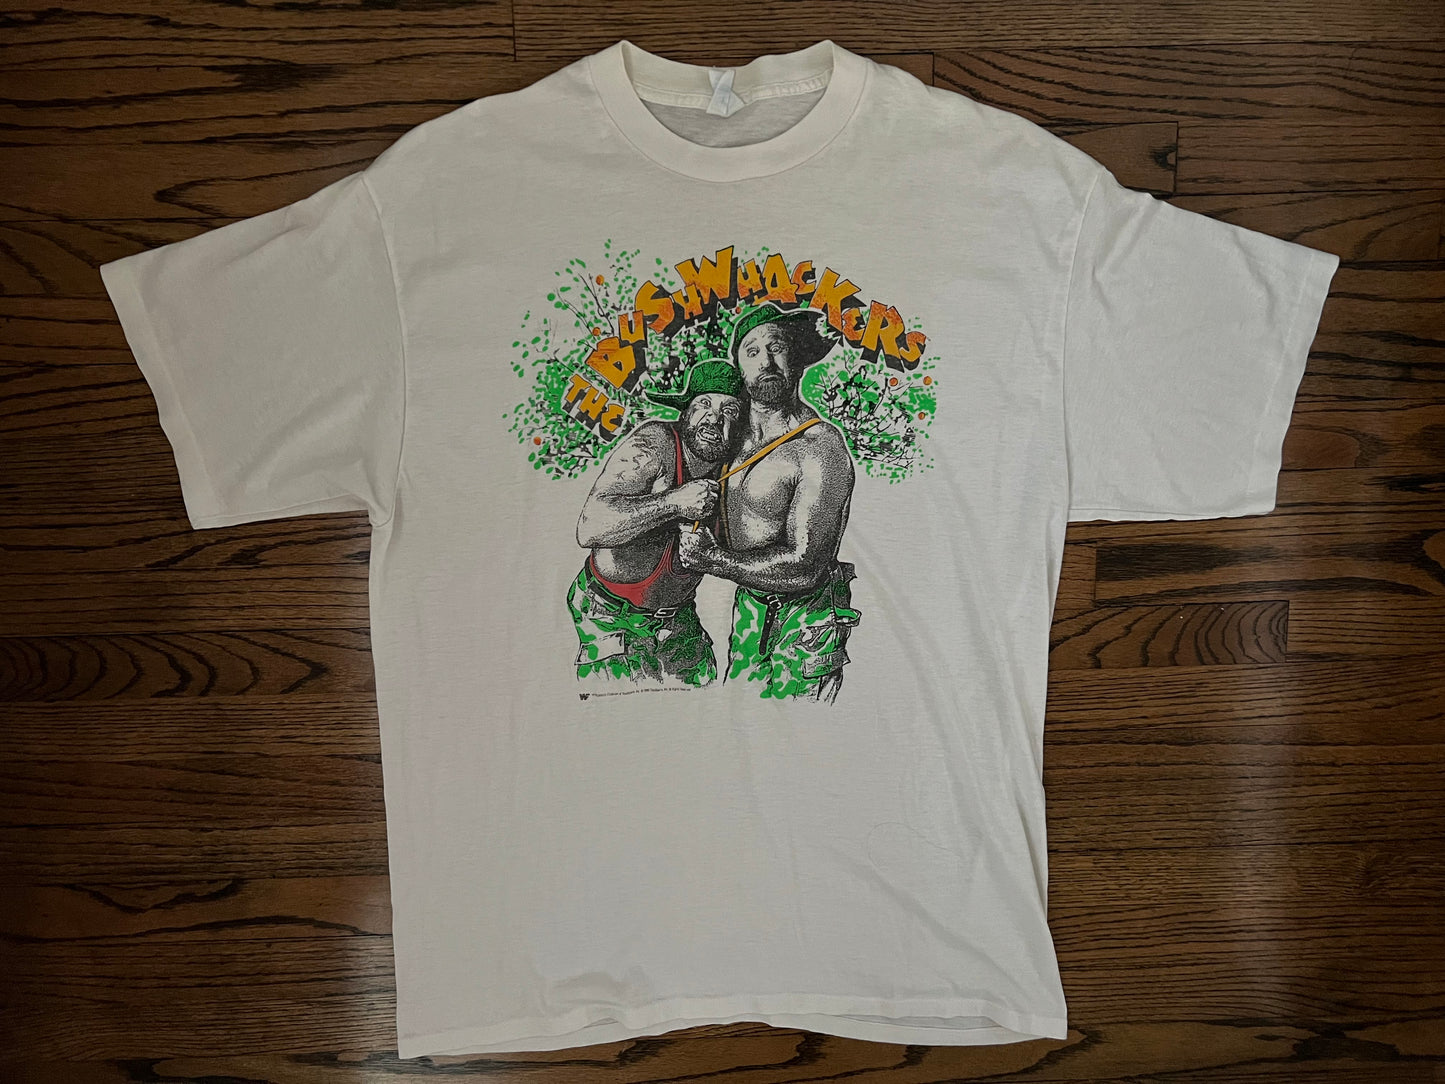 1990 WWF Bushwhackers shirt featuring Luke and Butch